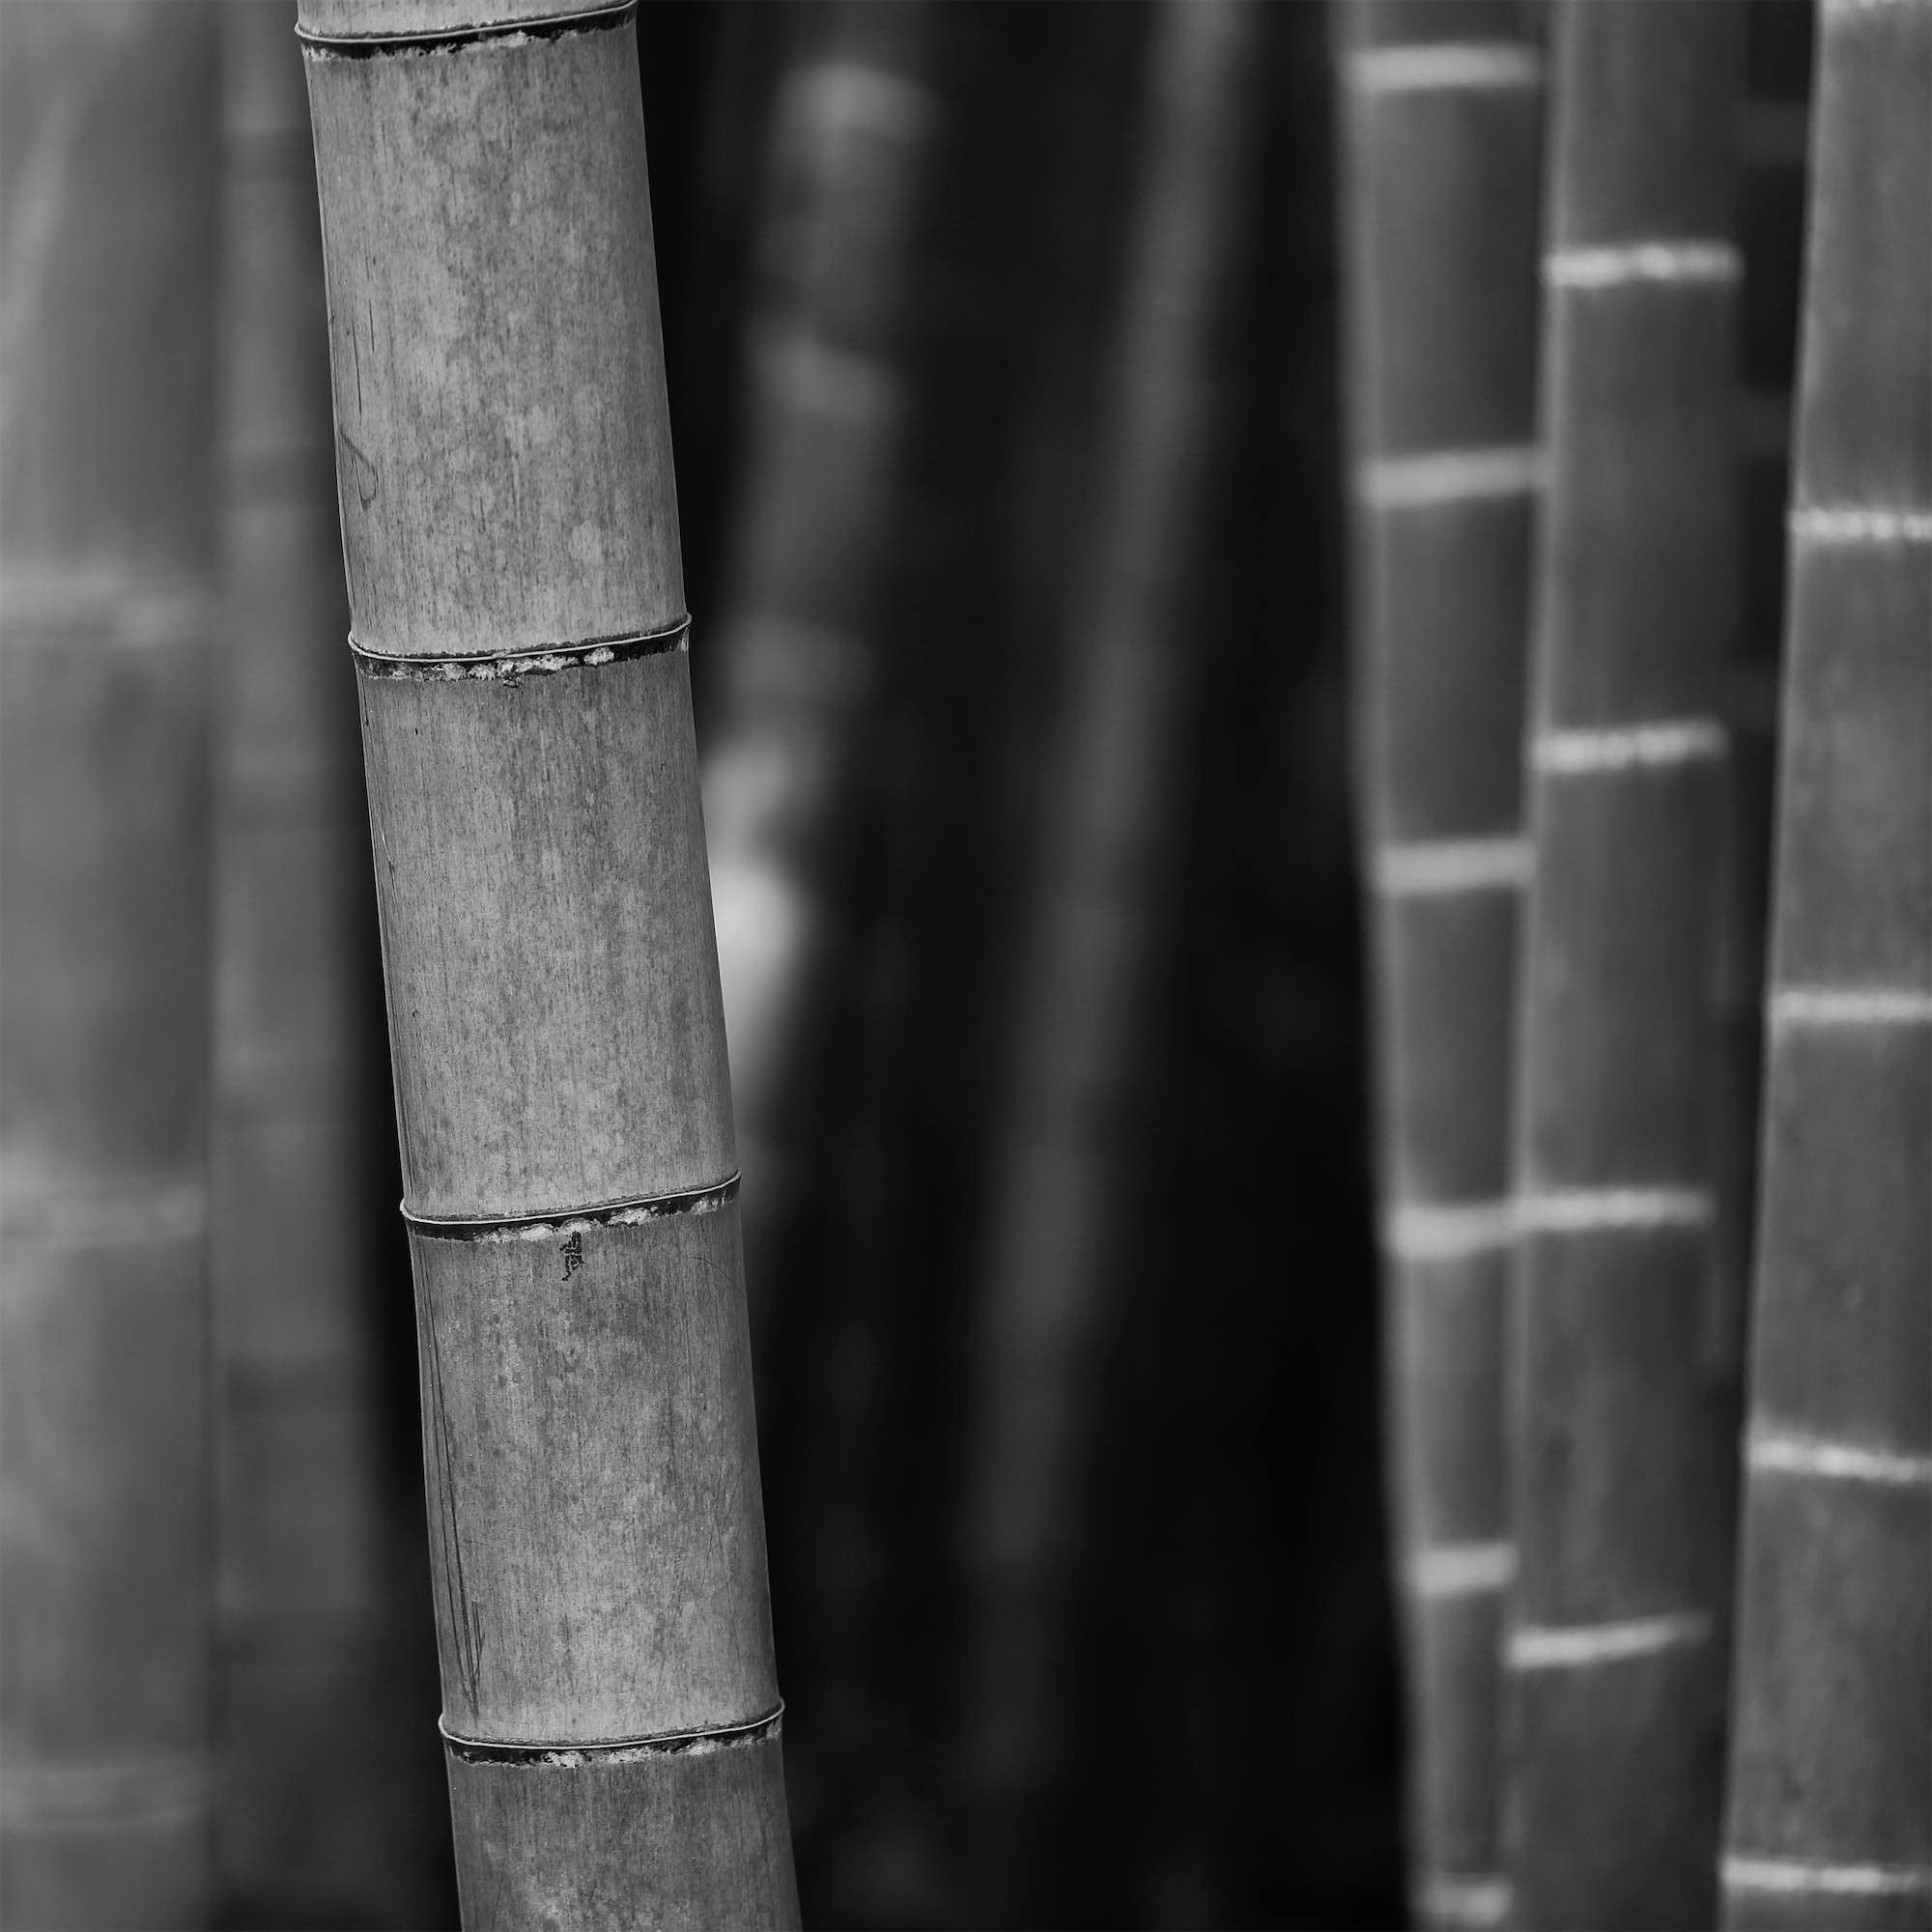 Bamboo stem powder